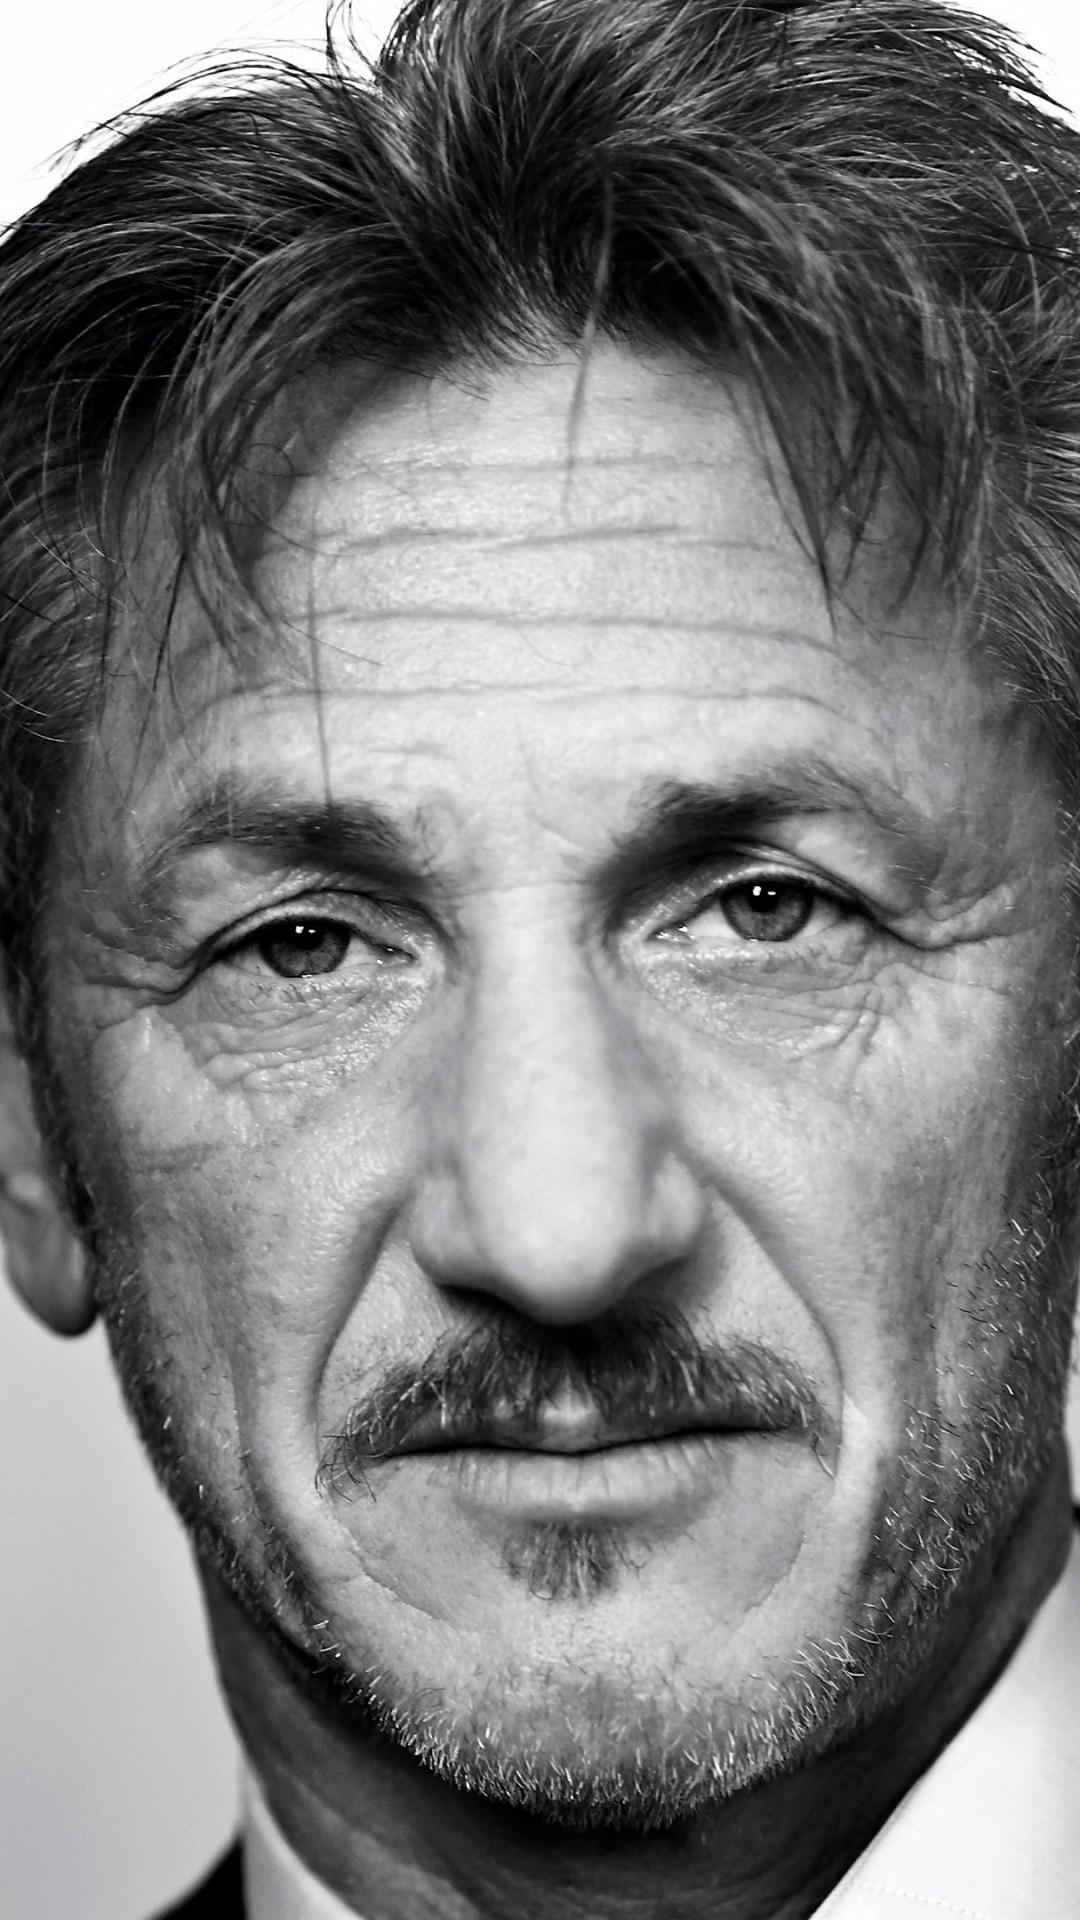 Sean Penn Portrait in Black & White Wallpaper for SAMSUNG Galaxy Note 3